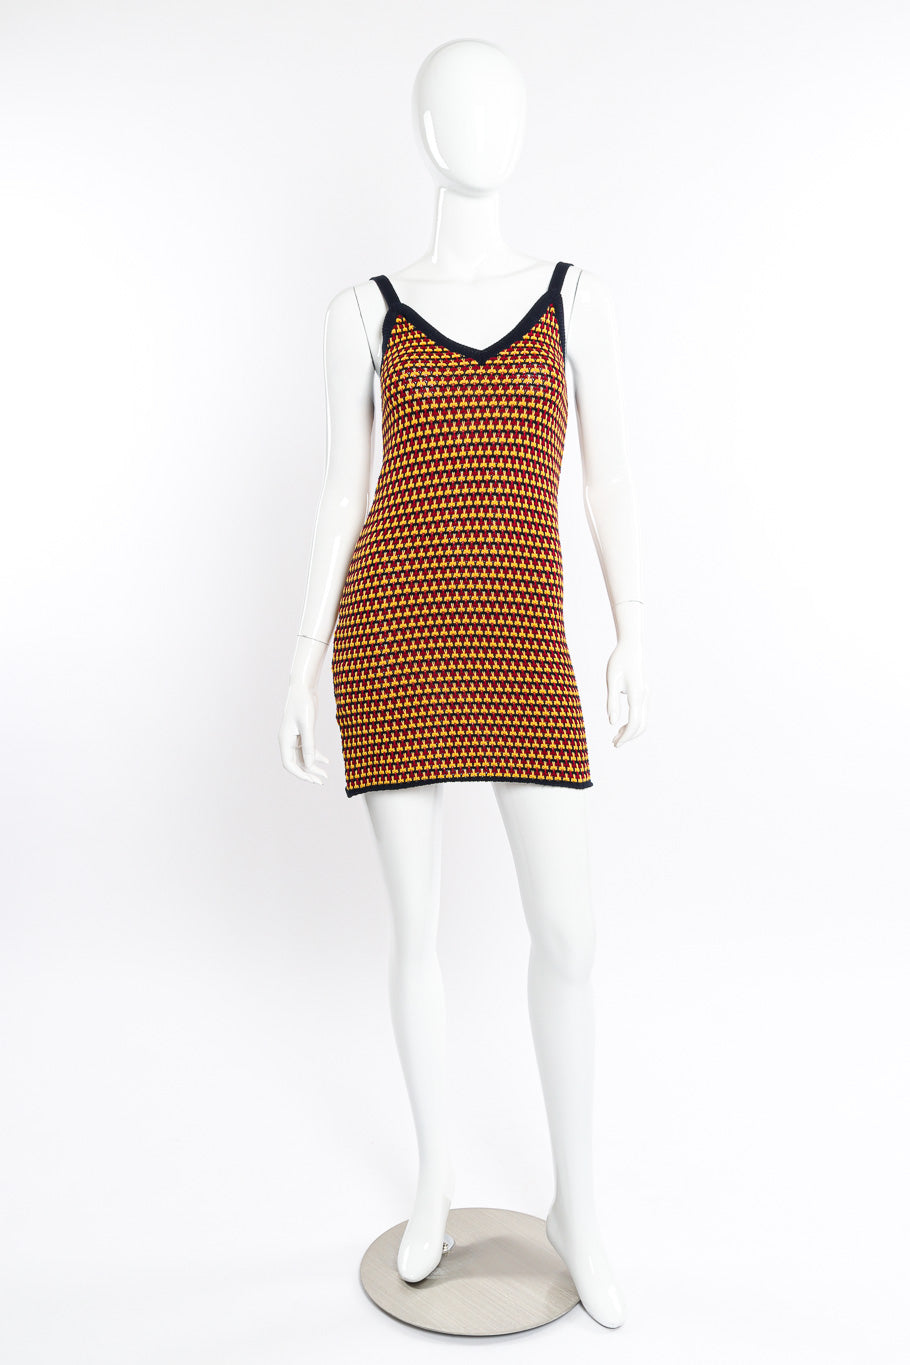 Miu Miu Scissor Knit Tank Dress front view on mannequin @Recessla